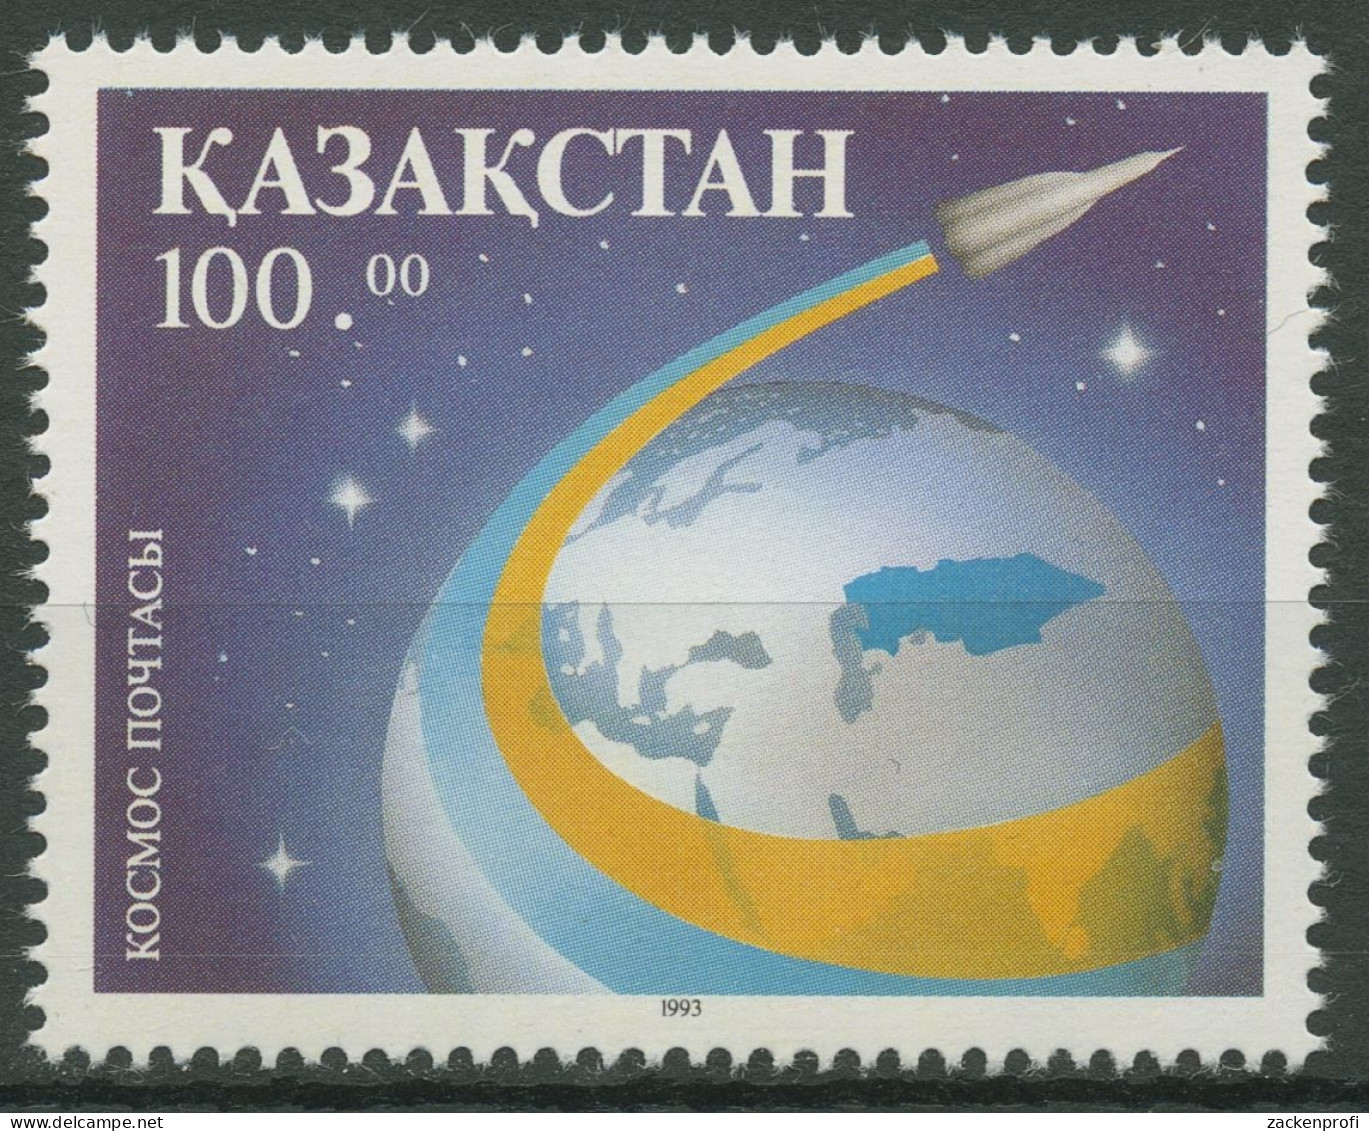 Kasachstan 1993 Kosmische Post Erdkugel 25 Postfrisch - Kasachstan